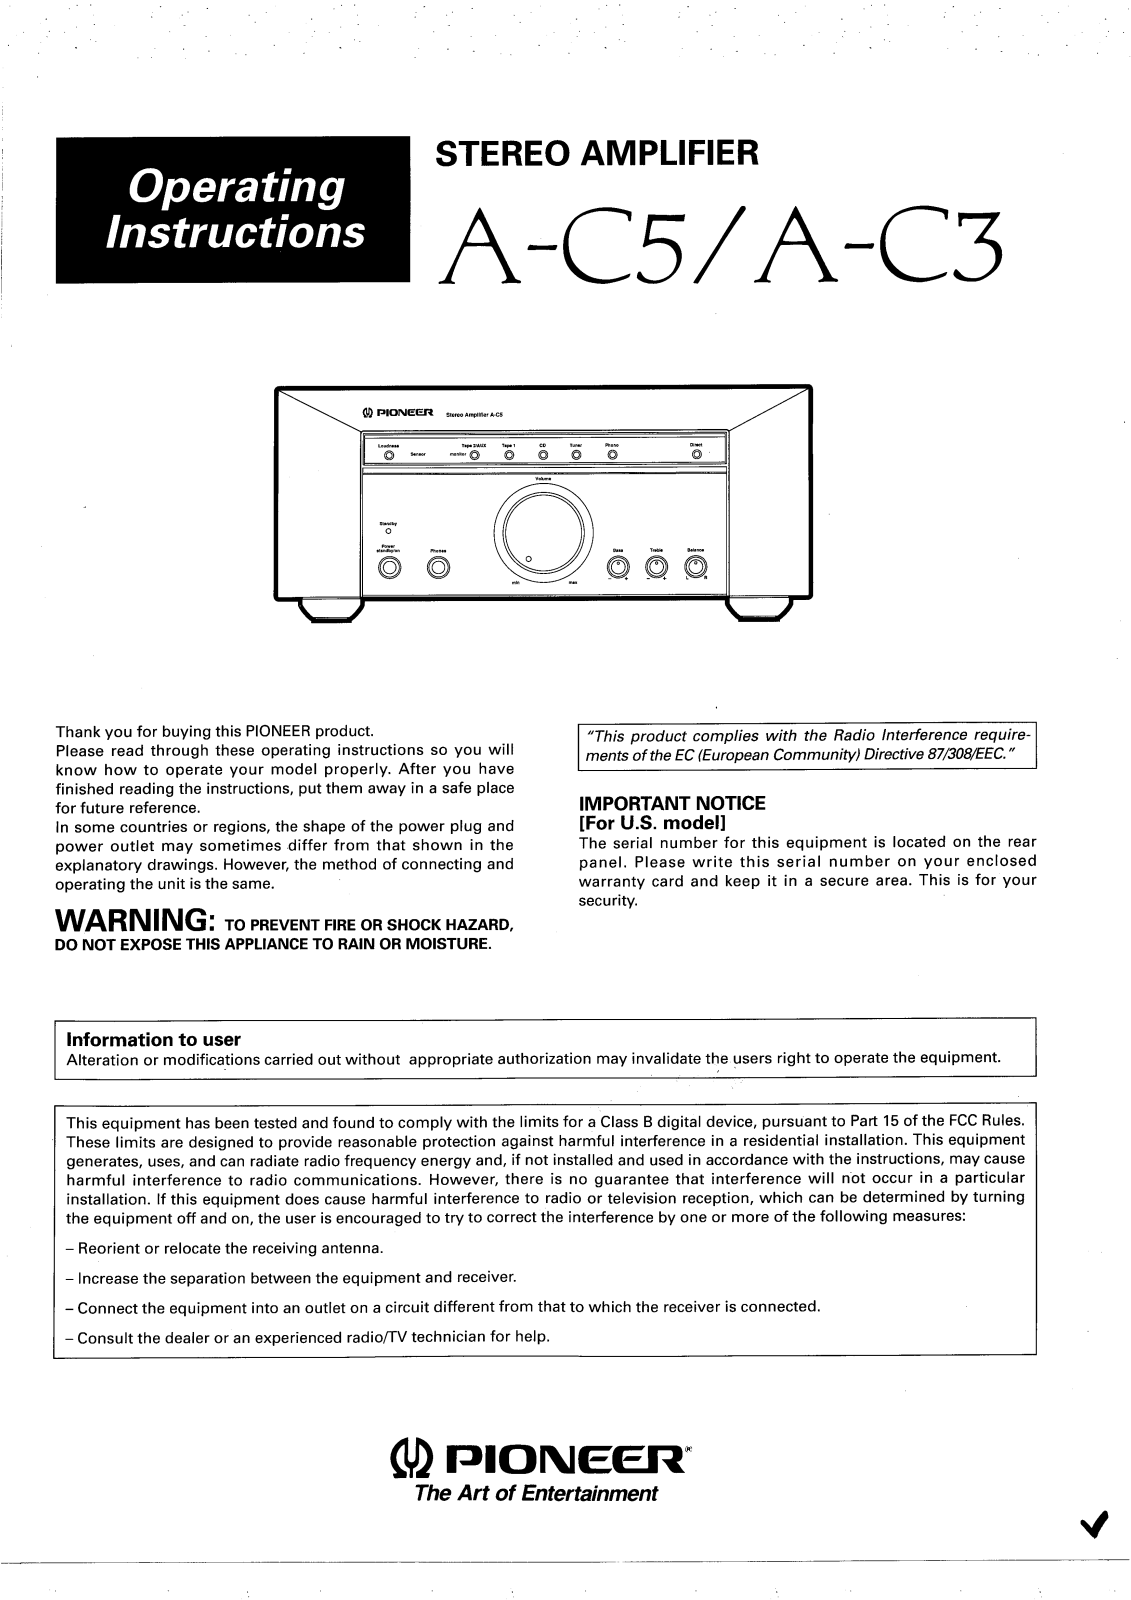 Pioneer A-C5, A-C3 Manual